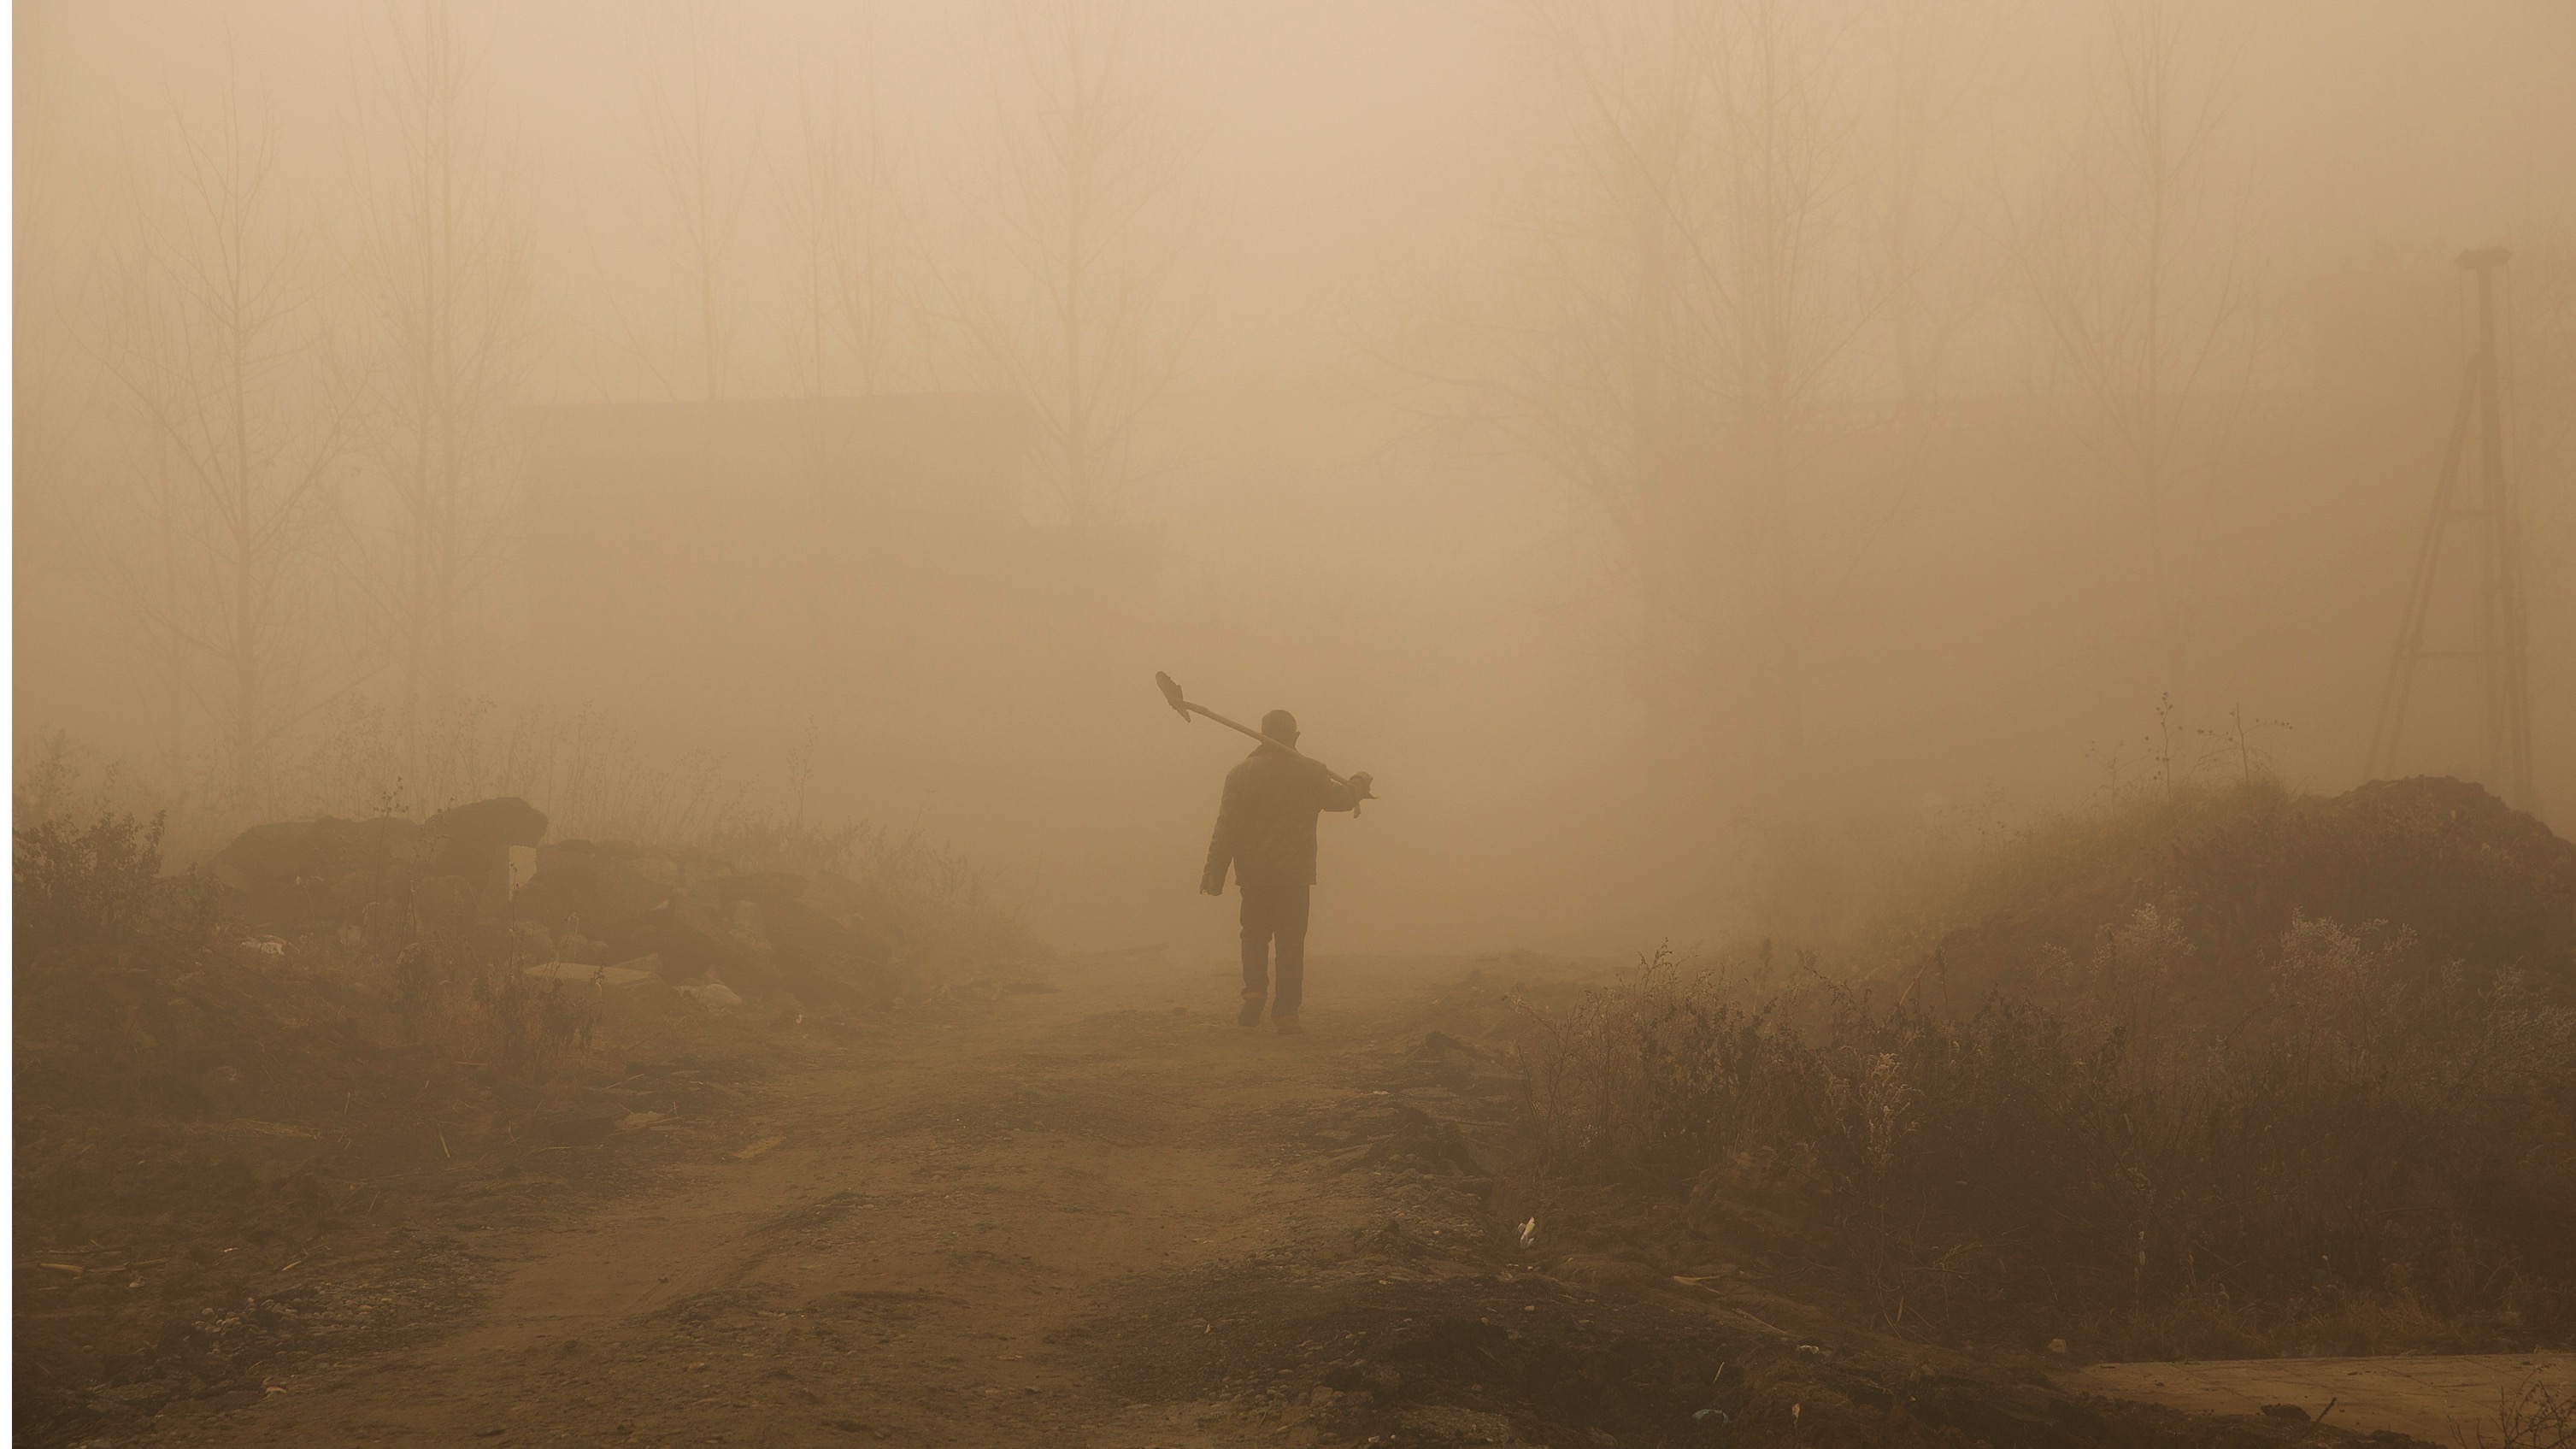 China's Pollution-Based Economy Creates Dangerous Haze